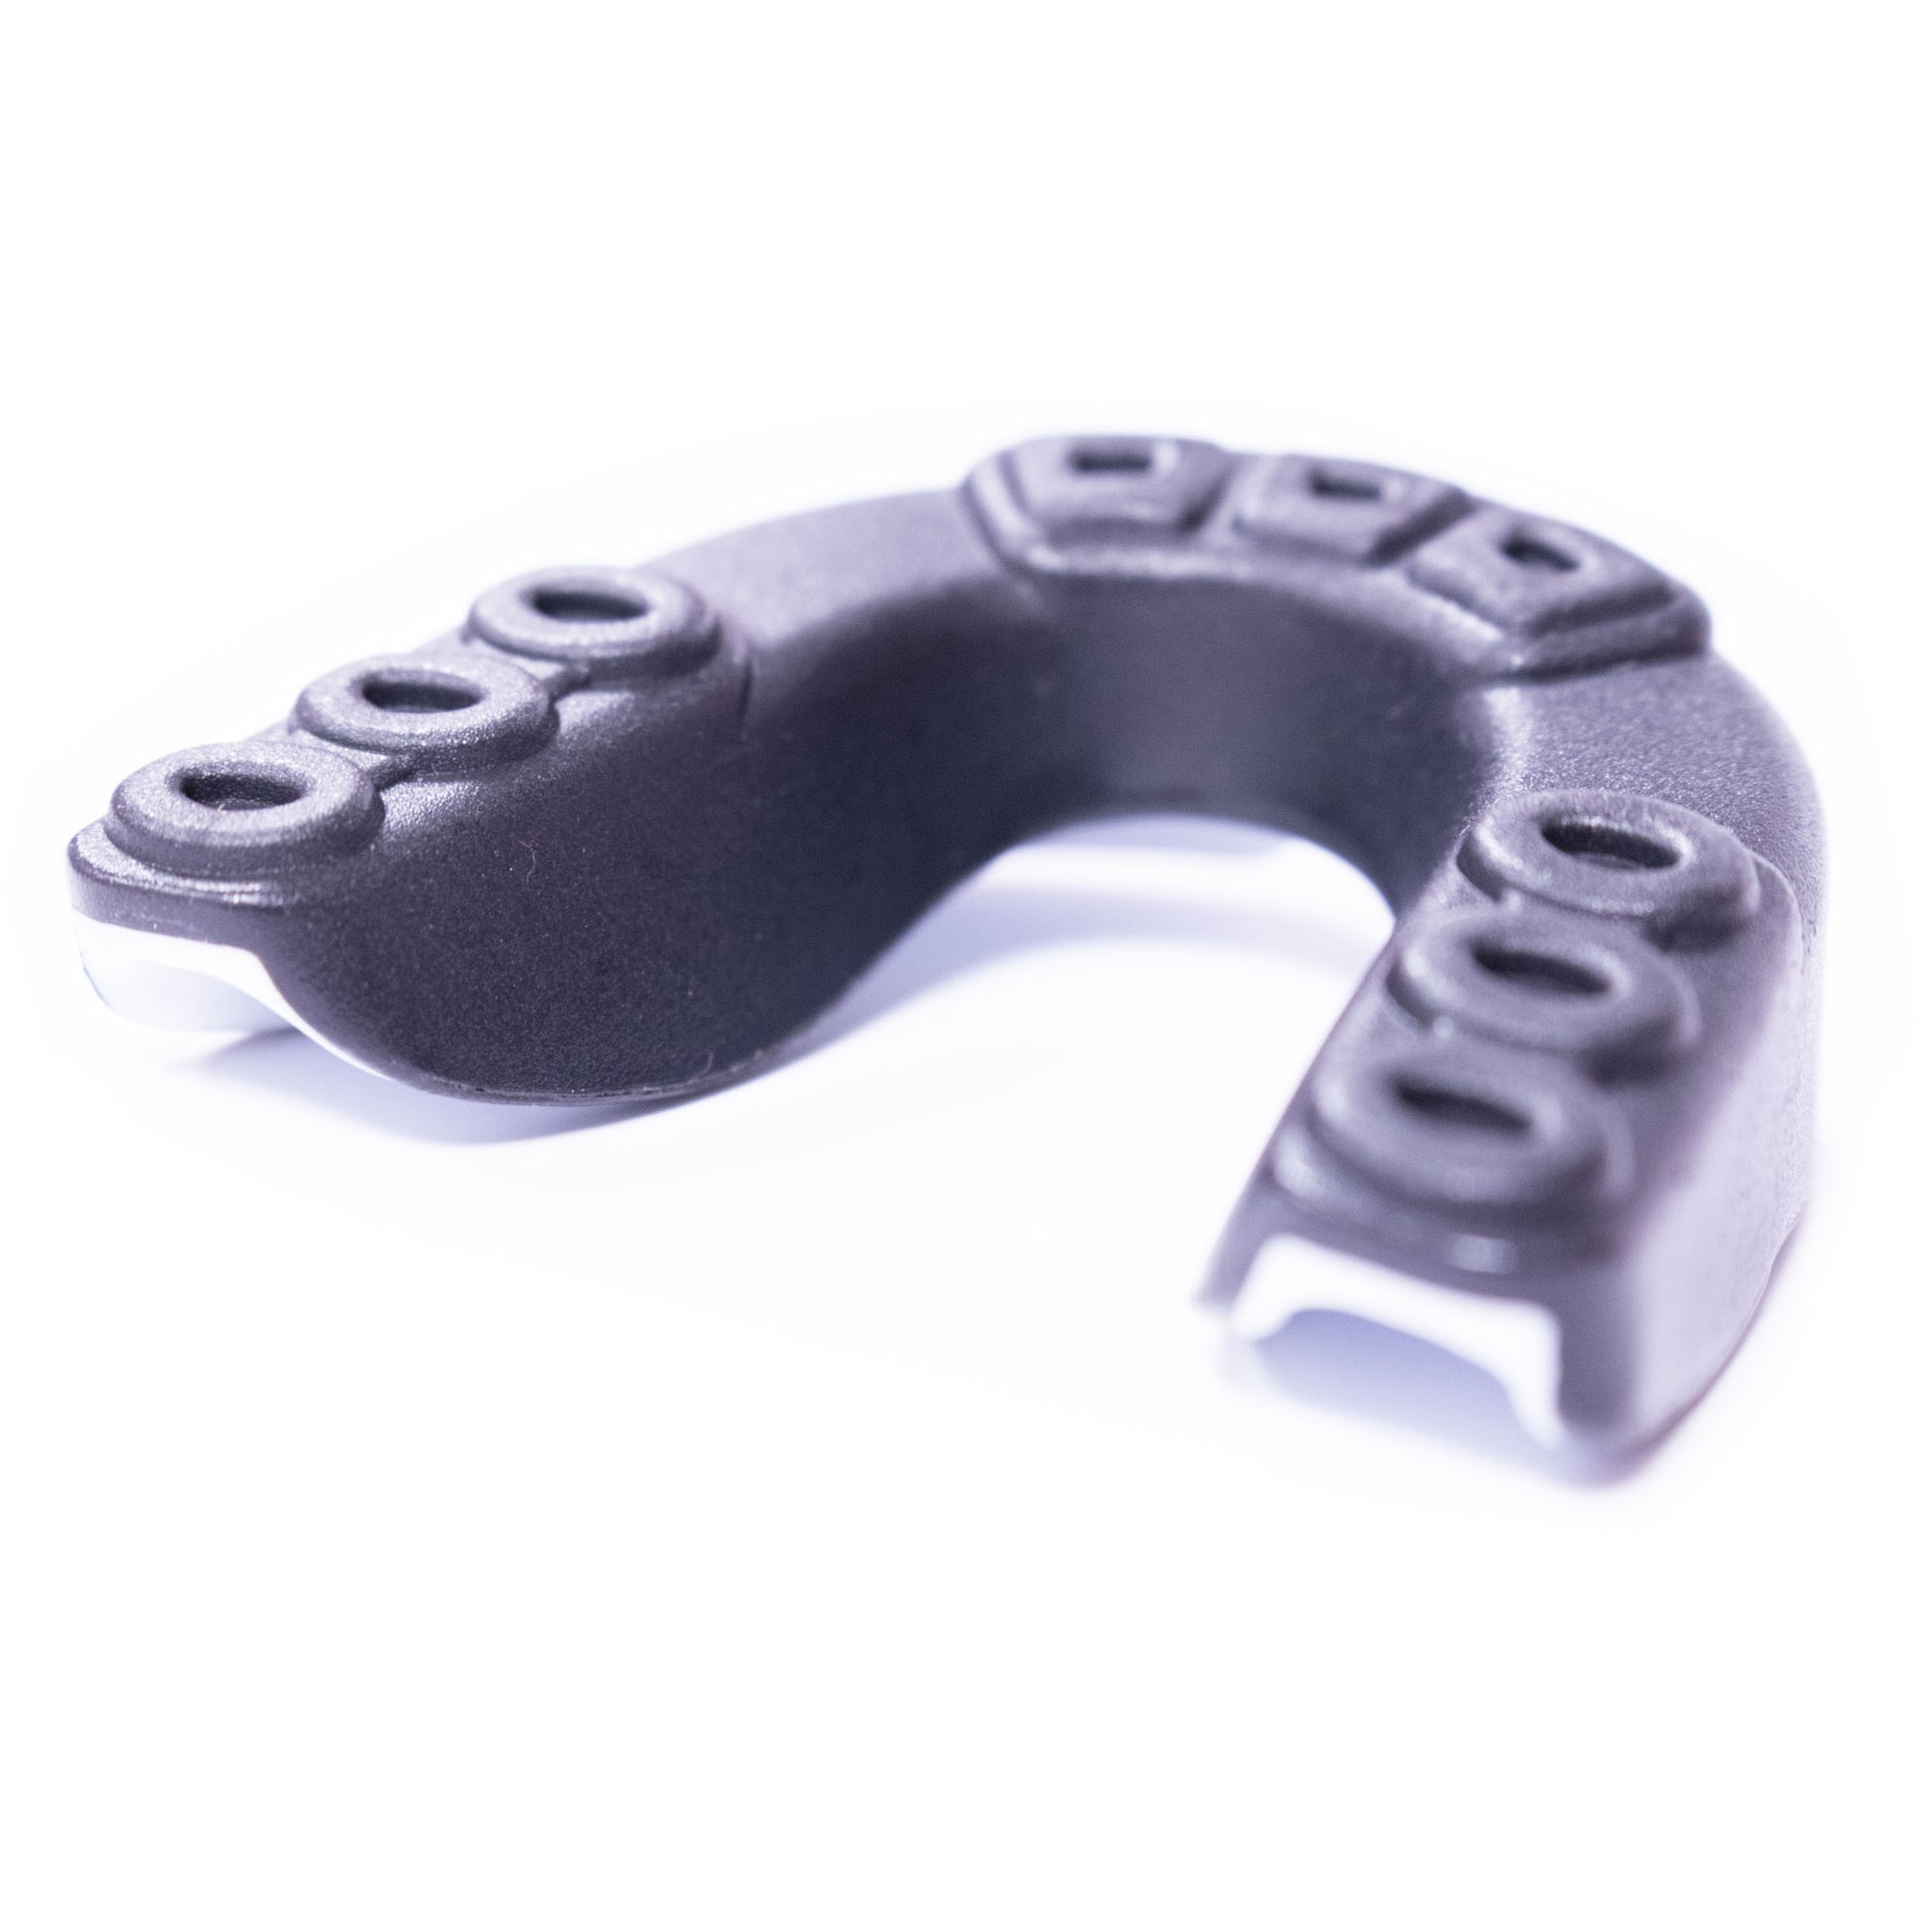 CORE Protection Mouth Guard Gum Shield – Black - Prime Delux Store